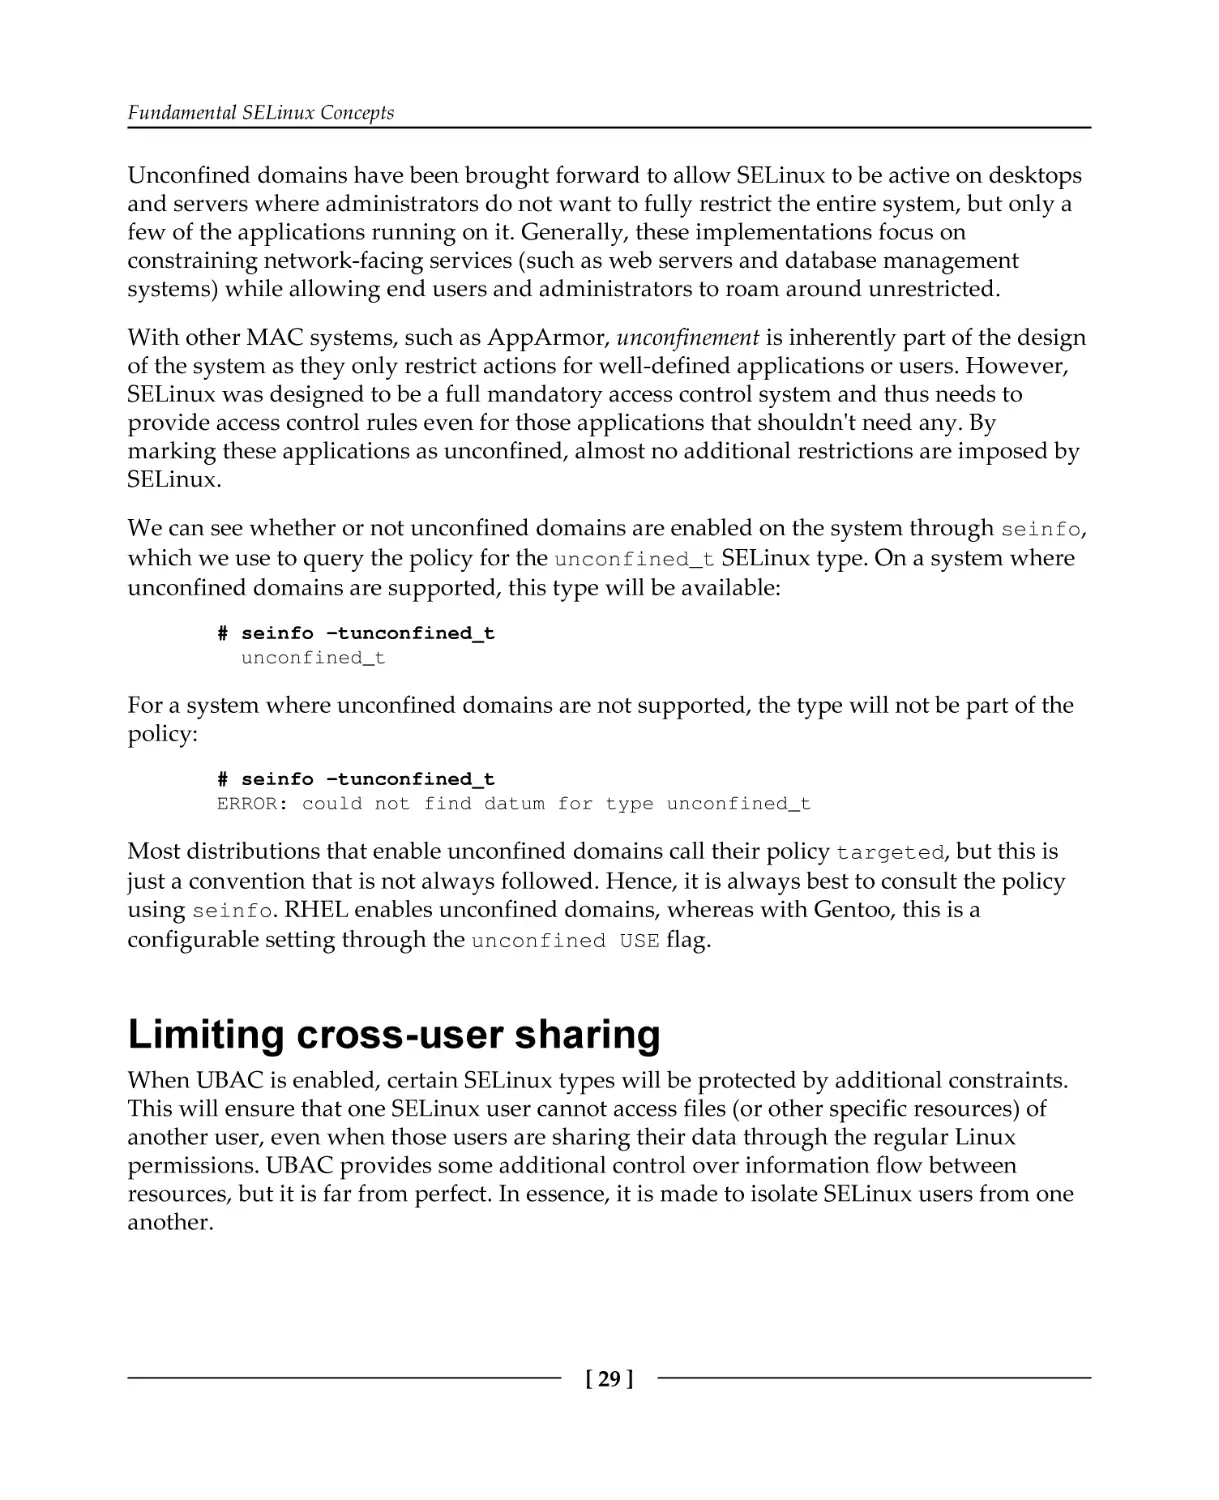 Limiting cross-user sharing